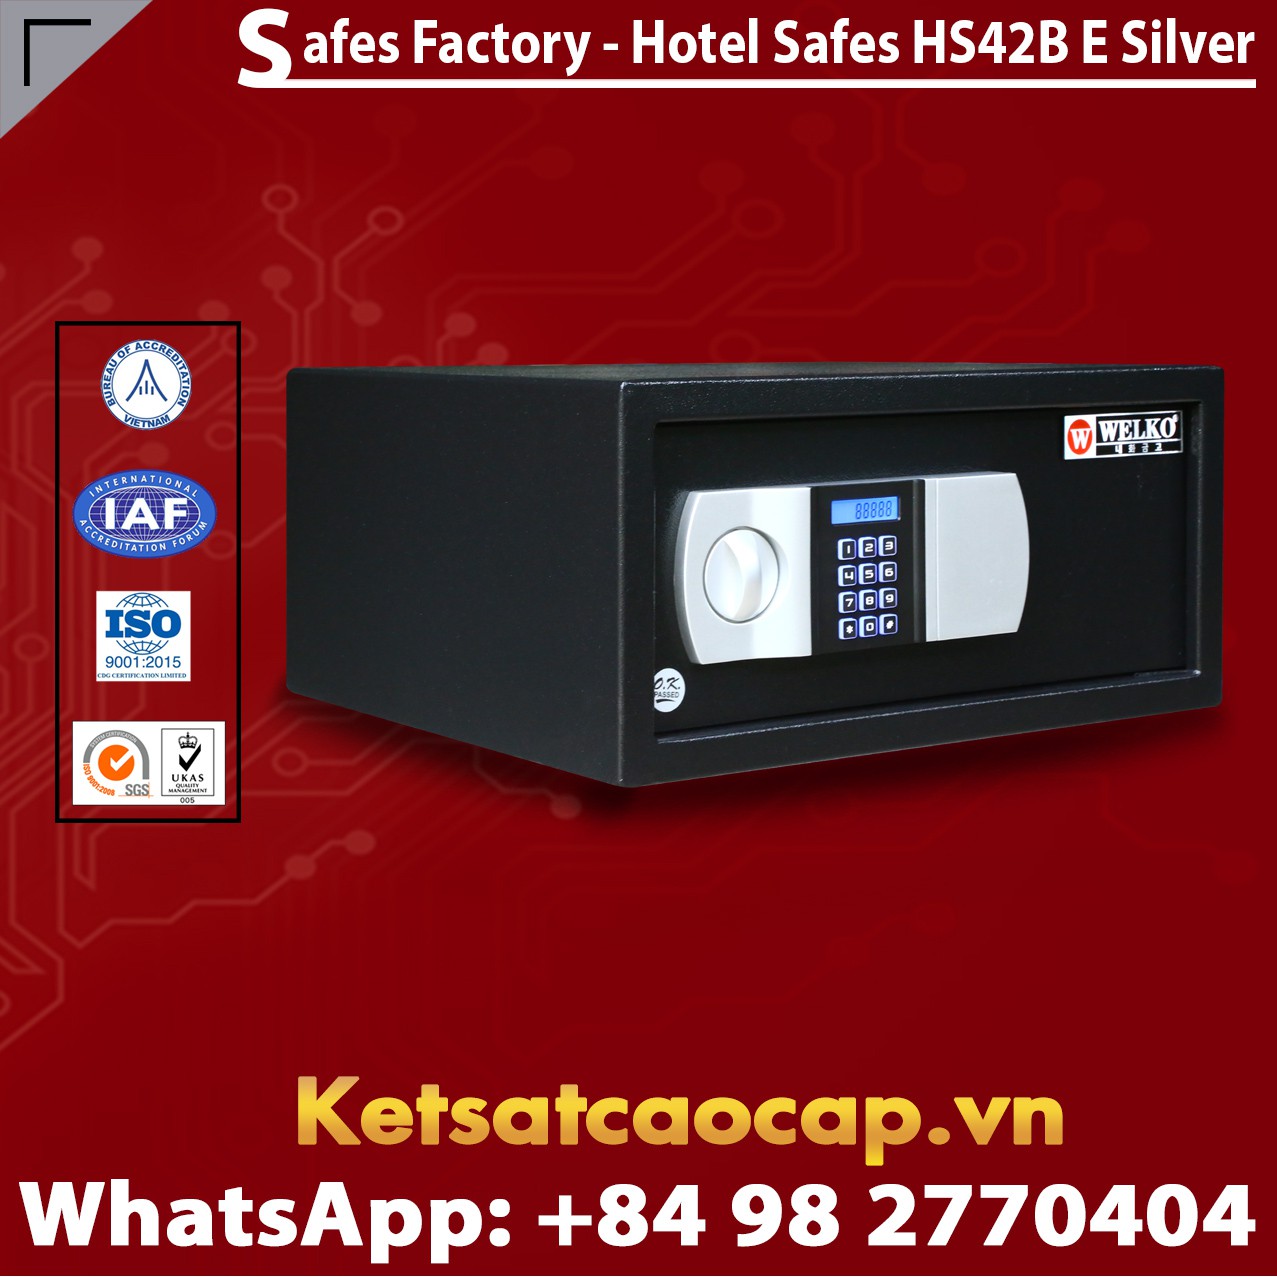 Portable Hotel Safes WELKO HS42 Black - E Silver